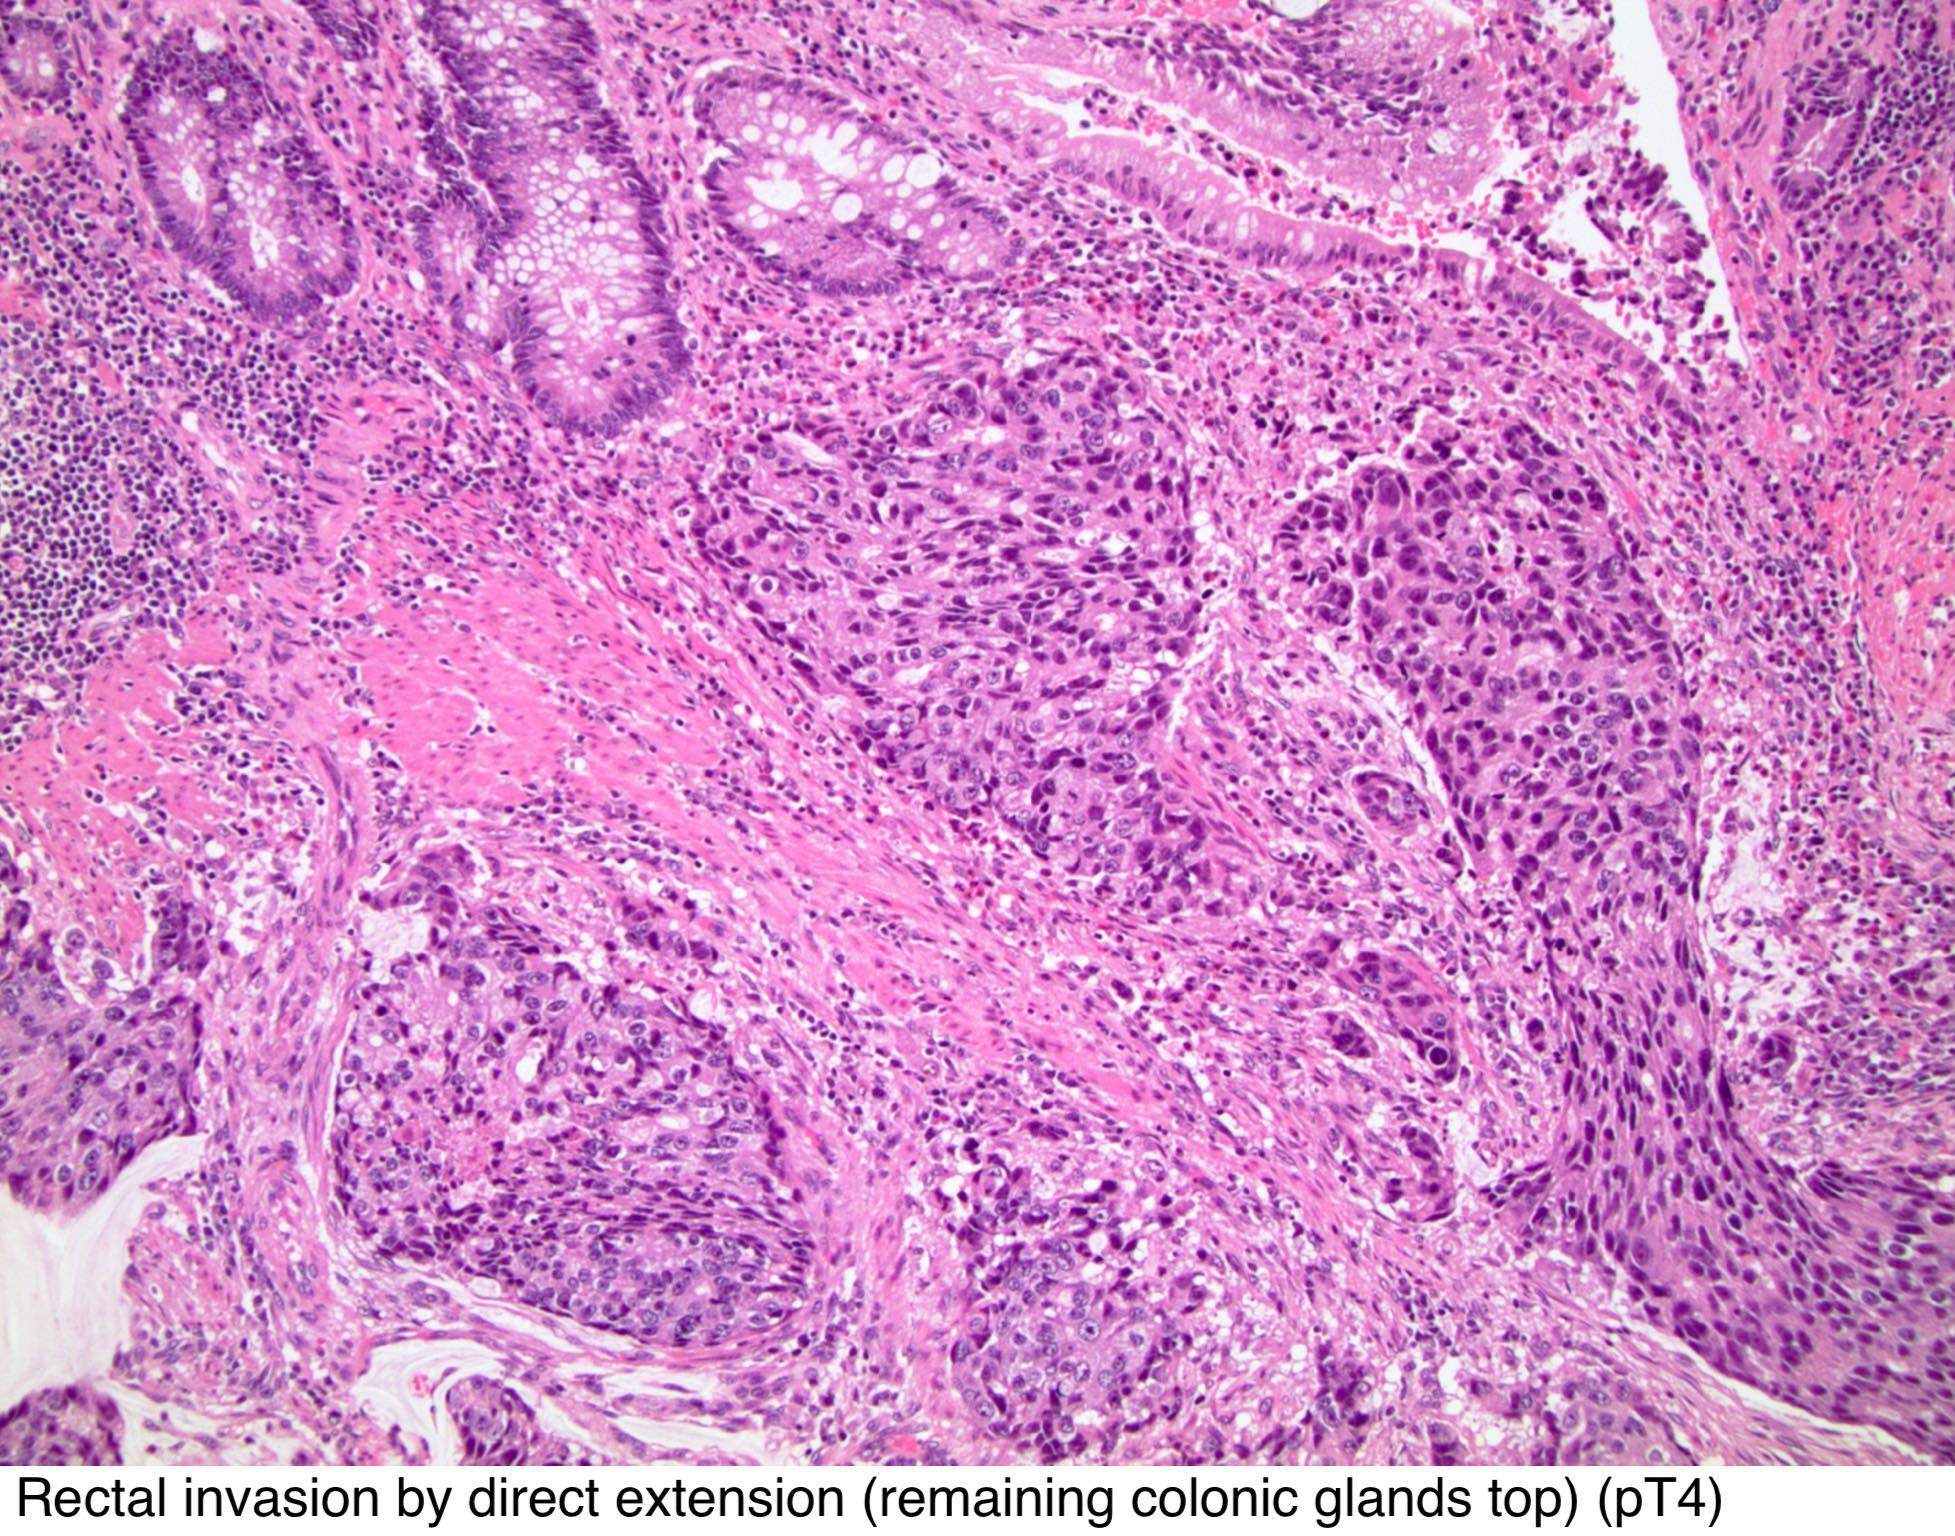 Papilloma in bladder cancer